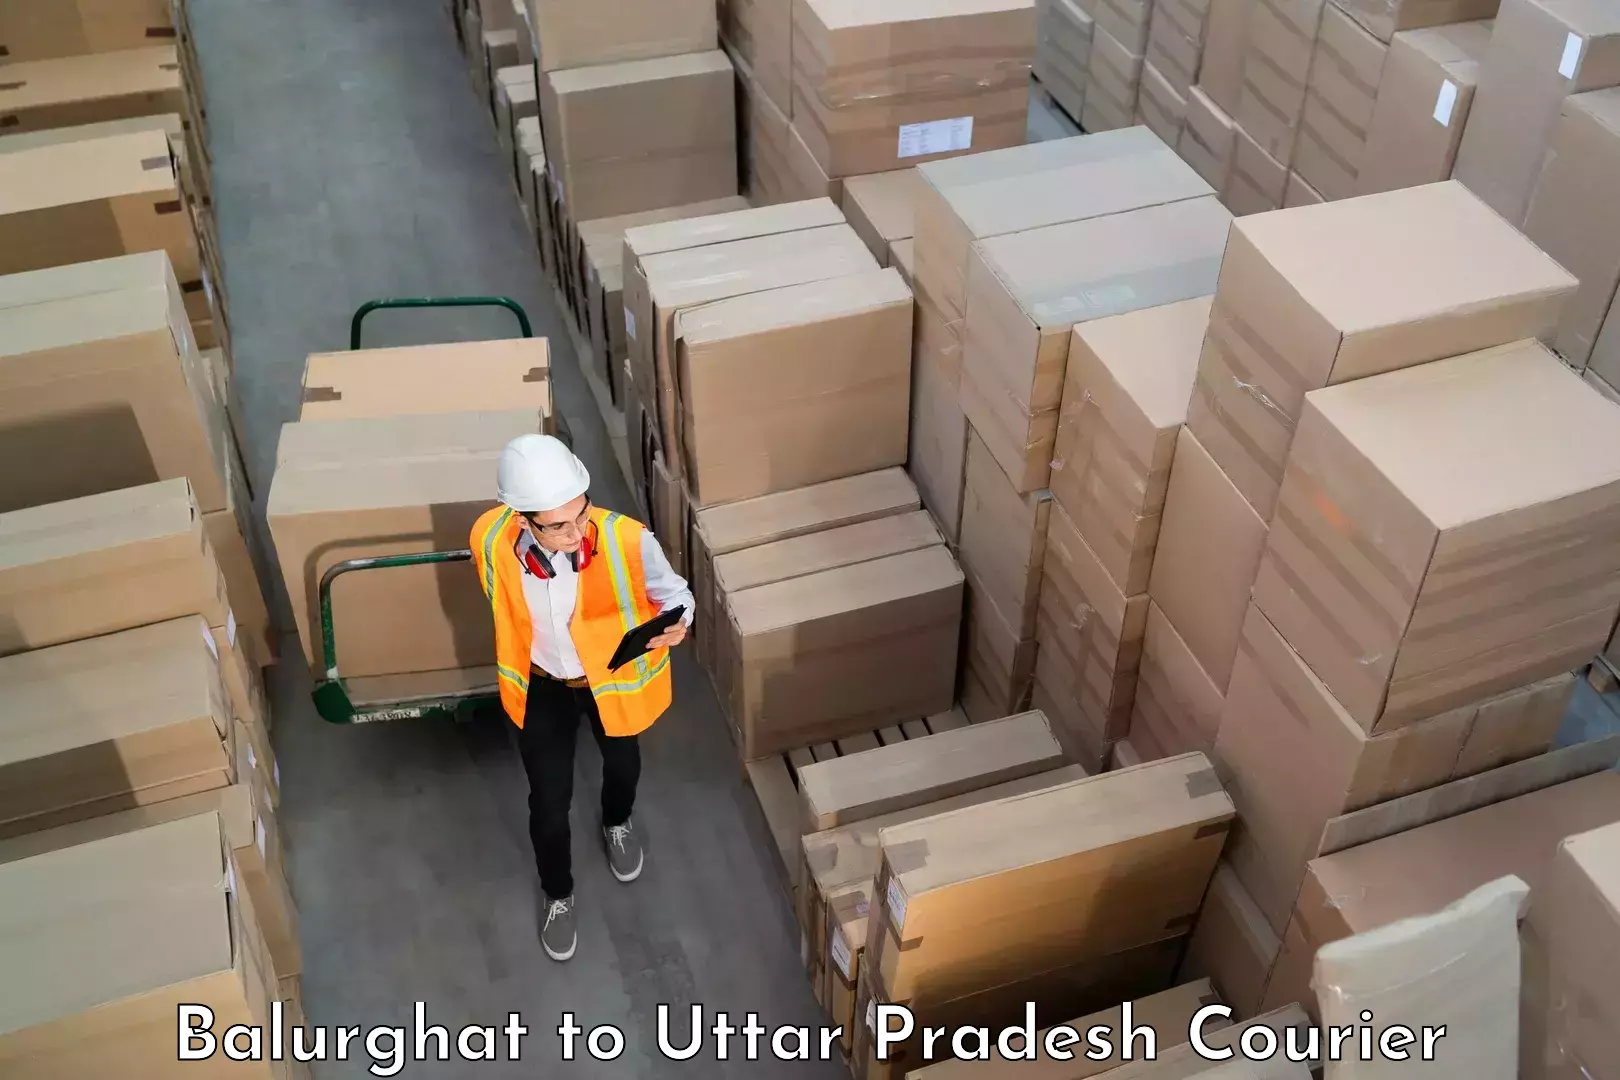 Luggage transport consultancy Balurghat to Varanasi